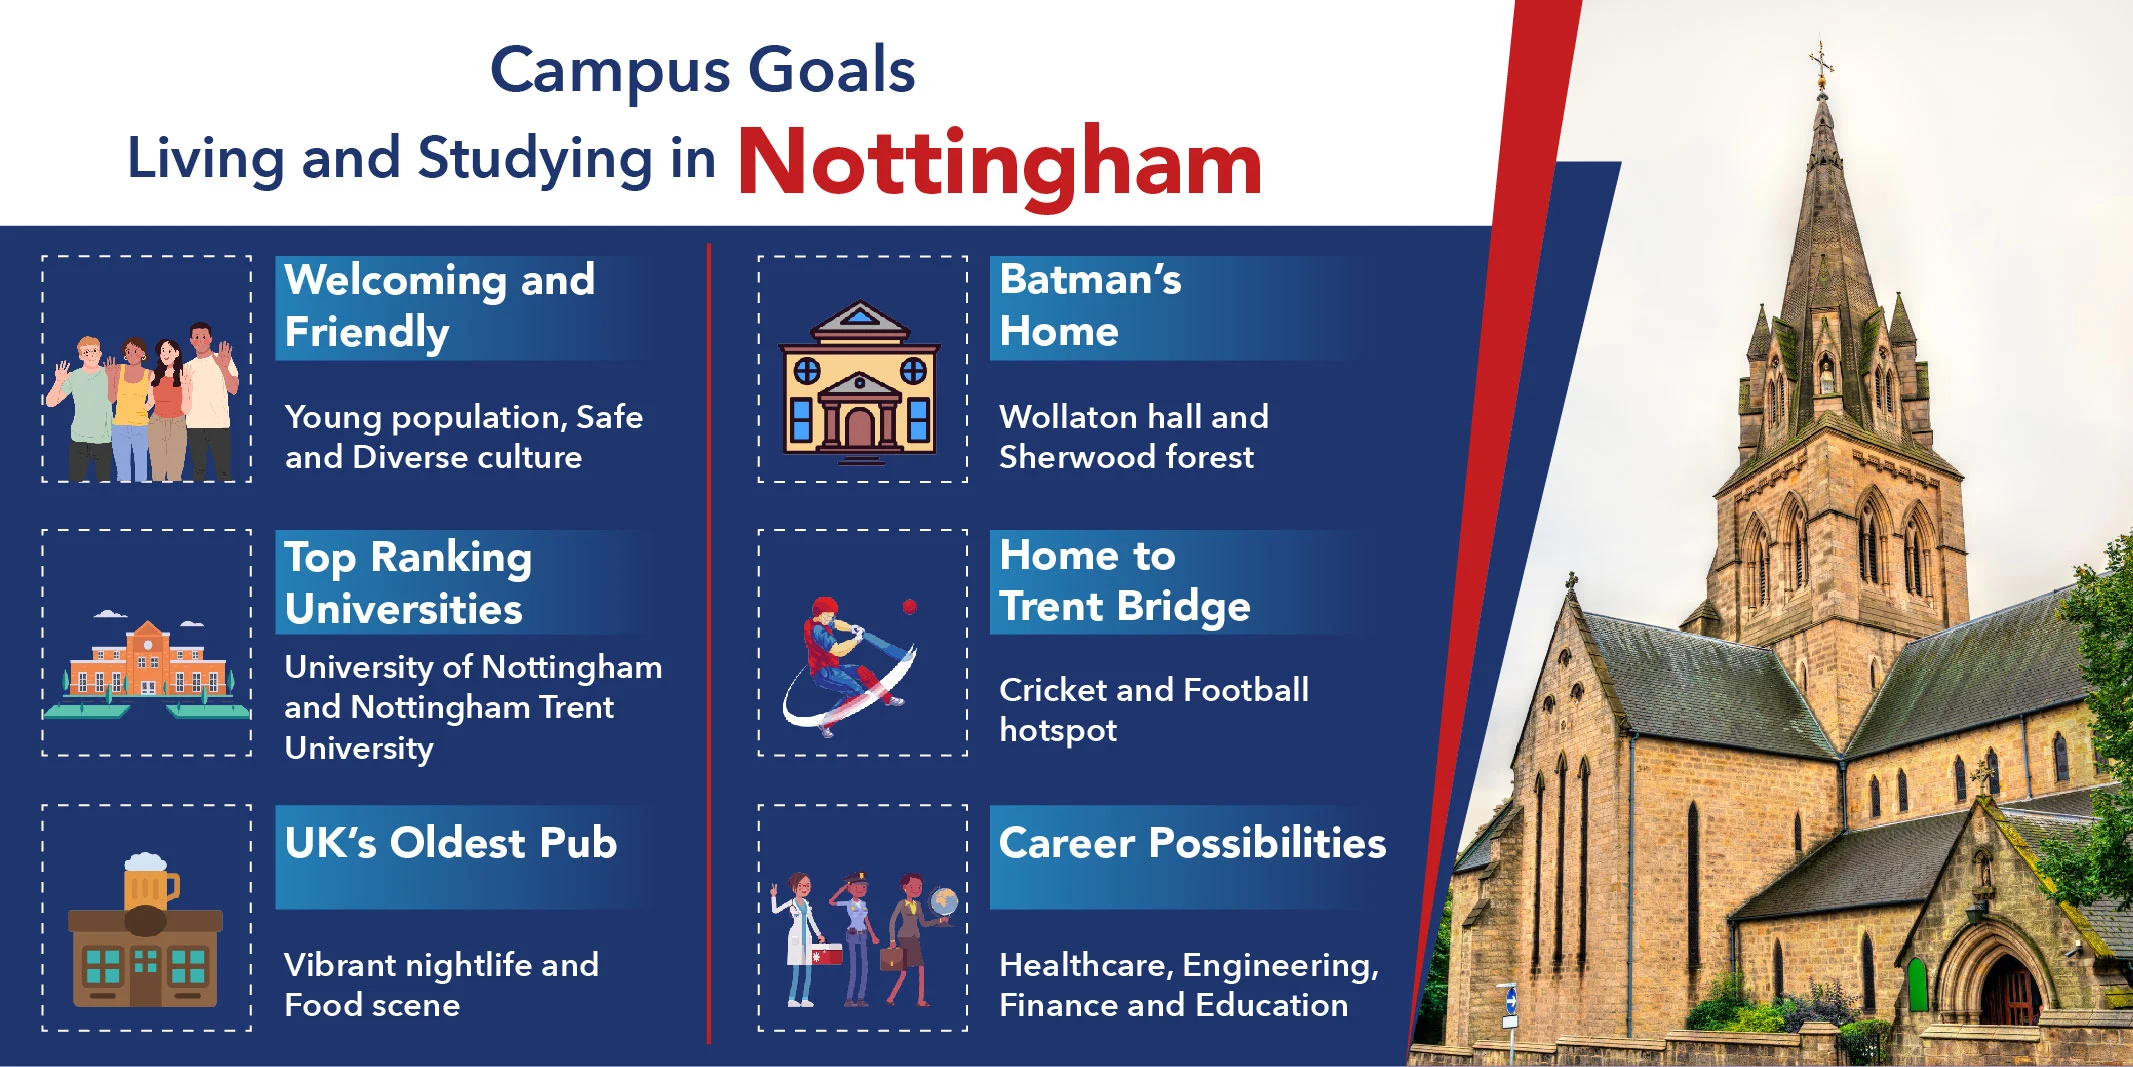 Is Nottingham safe for international students?